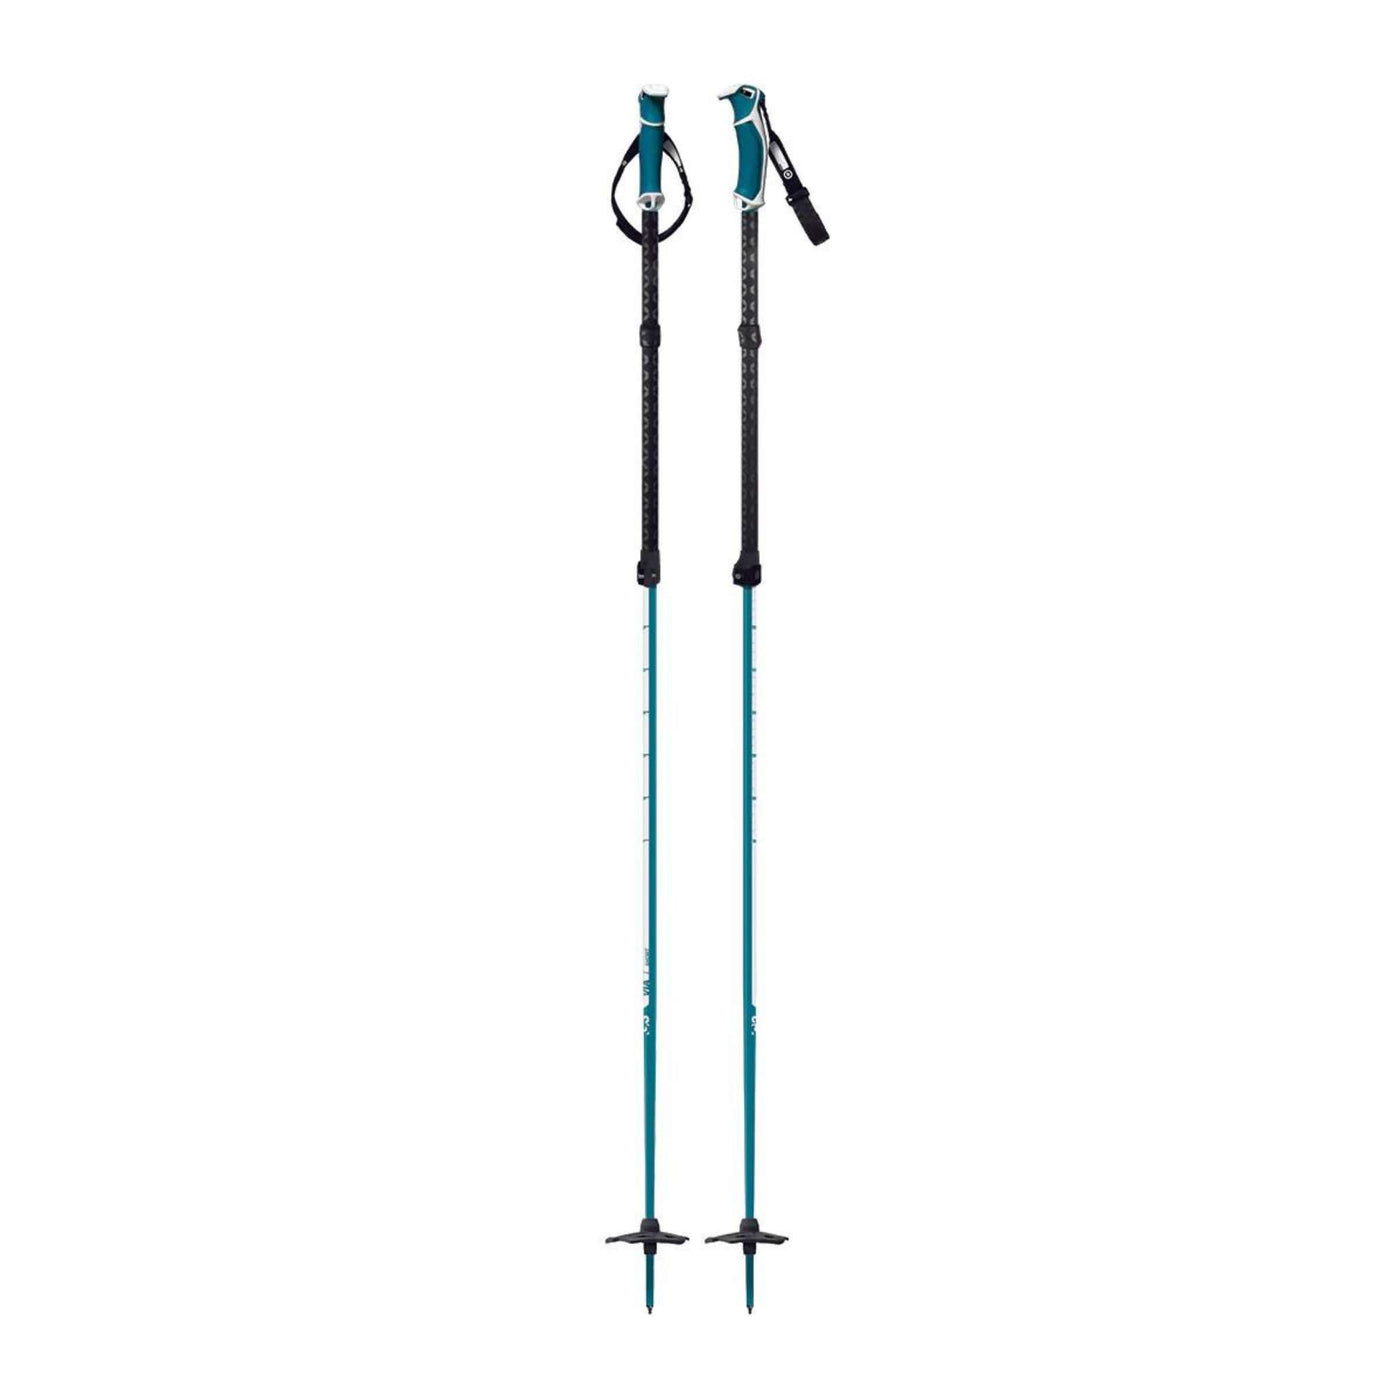 G3 VIA Aluminium Ski Poles 2 piece - Pair | Ski Touring Poles | Further Faster Christchurch NZ #teal